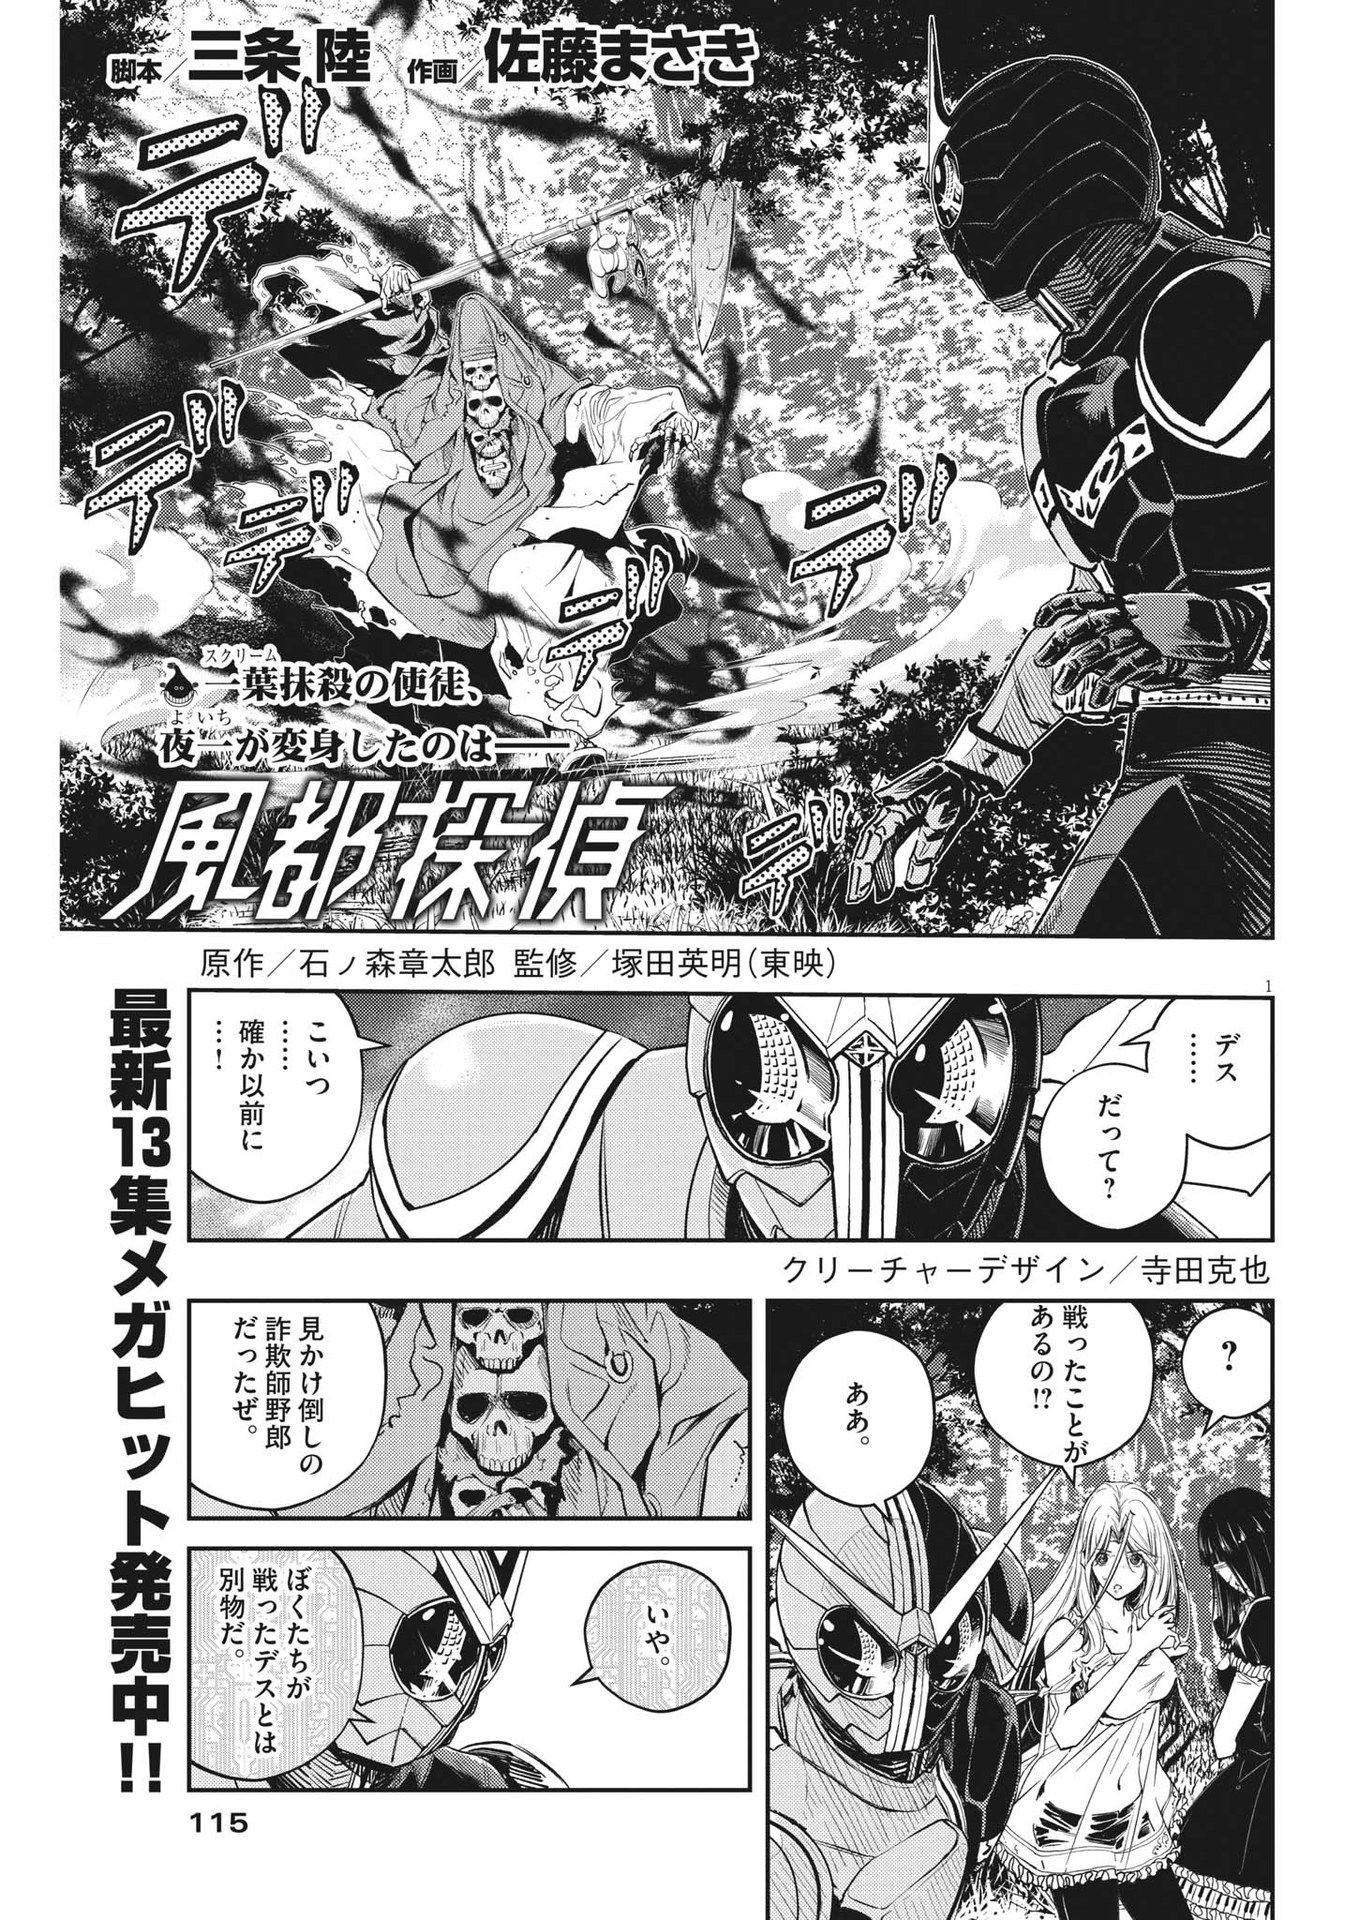 Read Kamen Rider W Fuuto Tantei Chapter 21 - MangaFreak